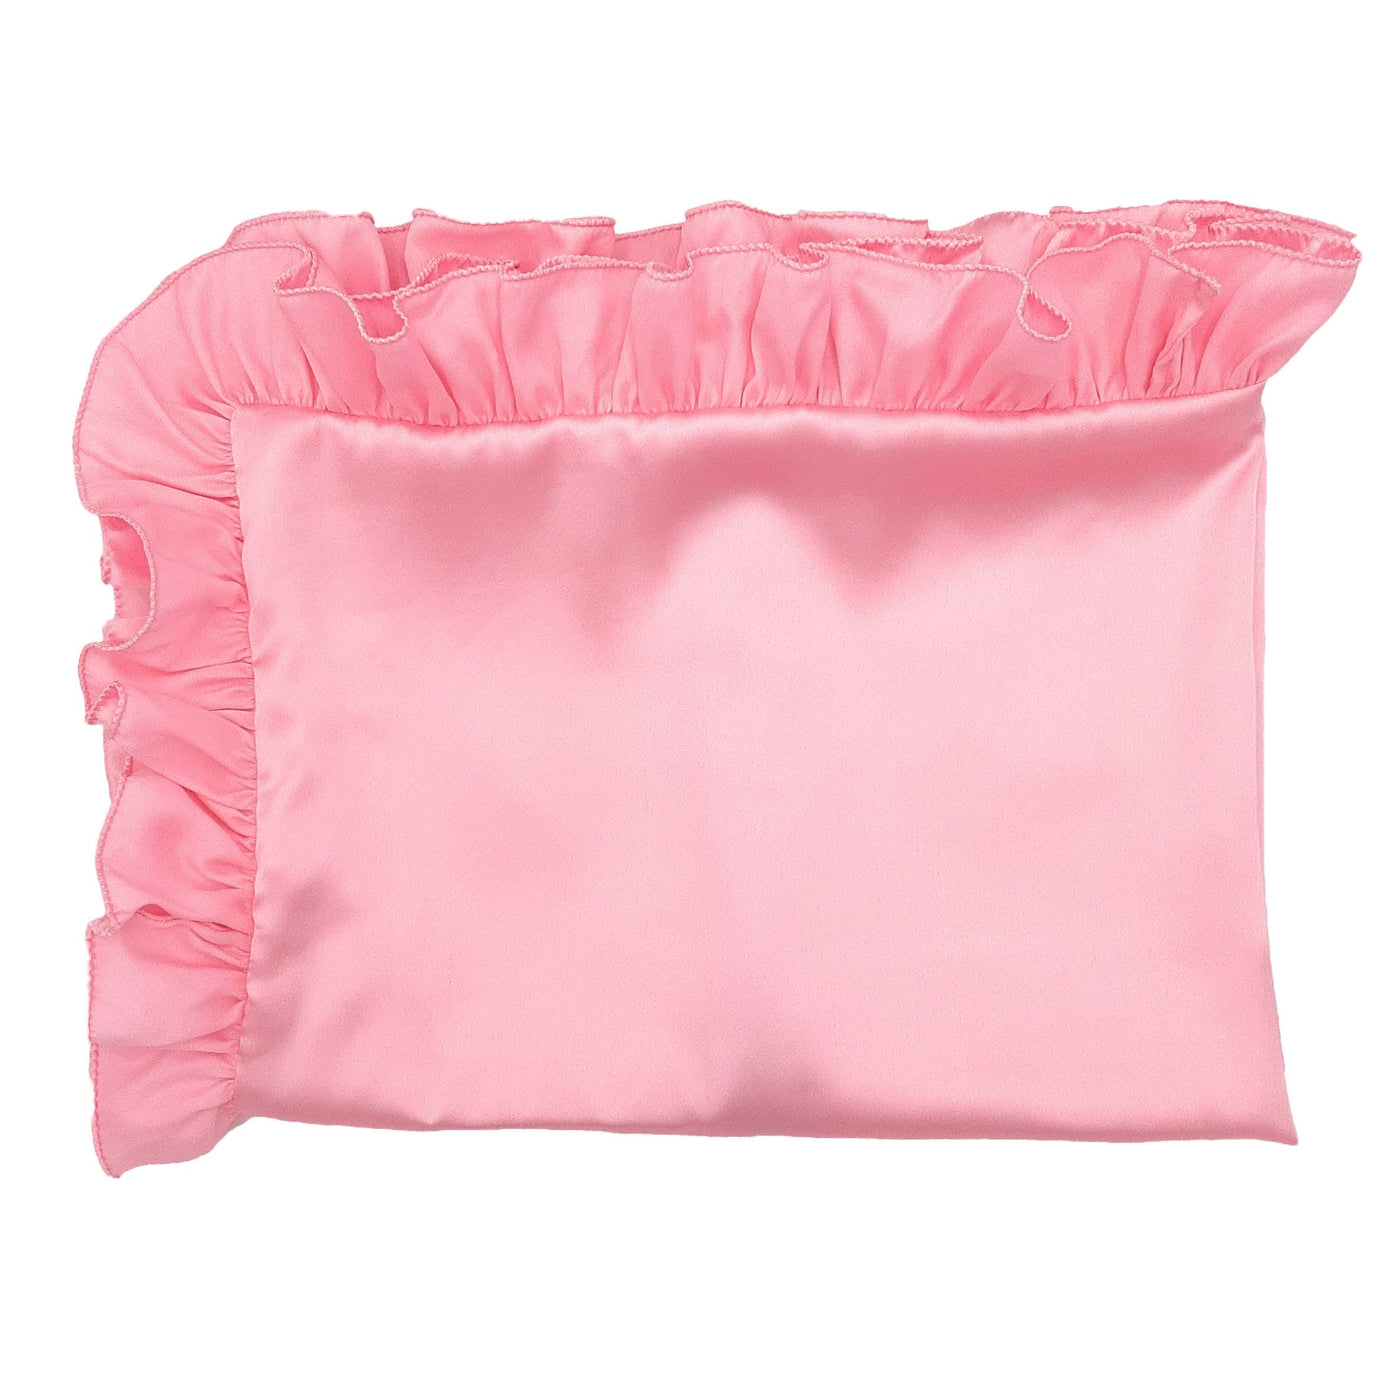 Misty Body Pillow Case 150cm / Microfiber Peach Skin